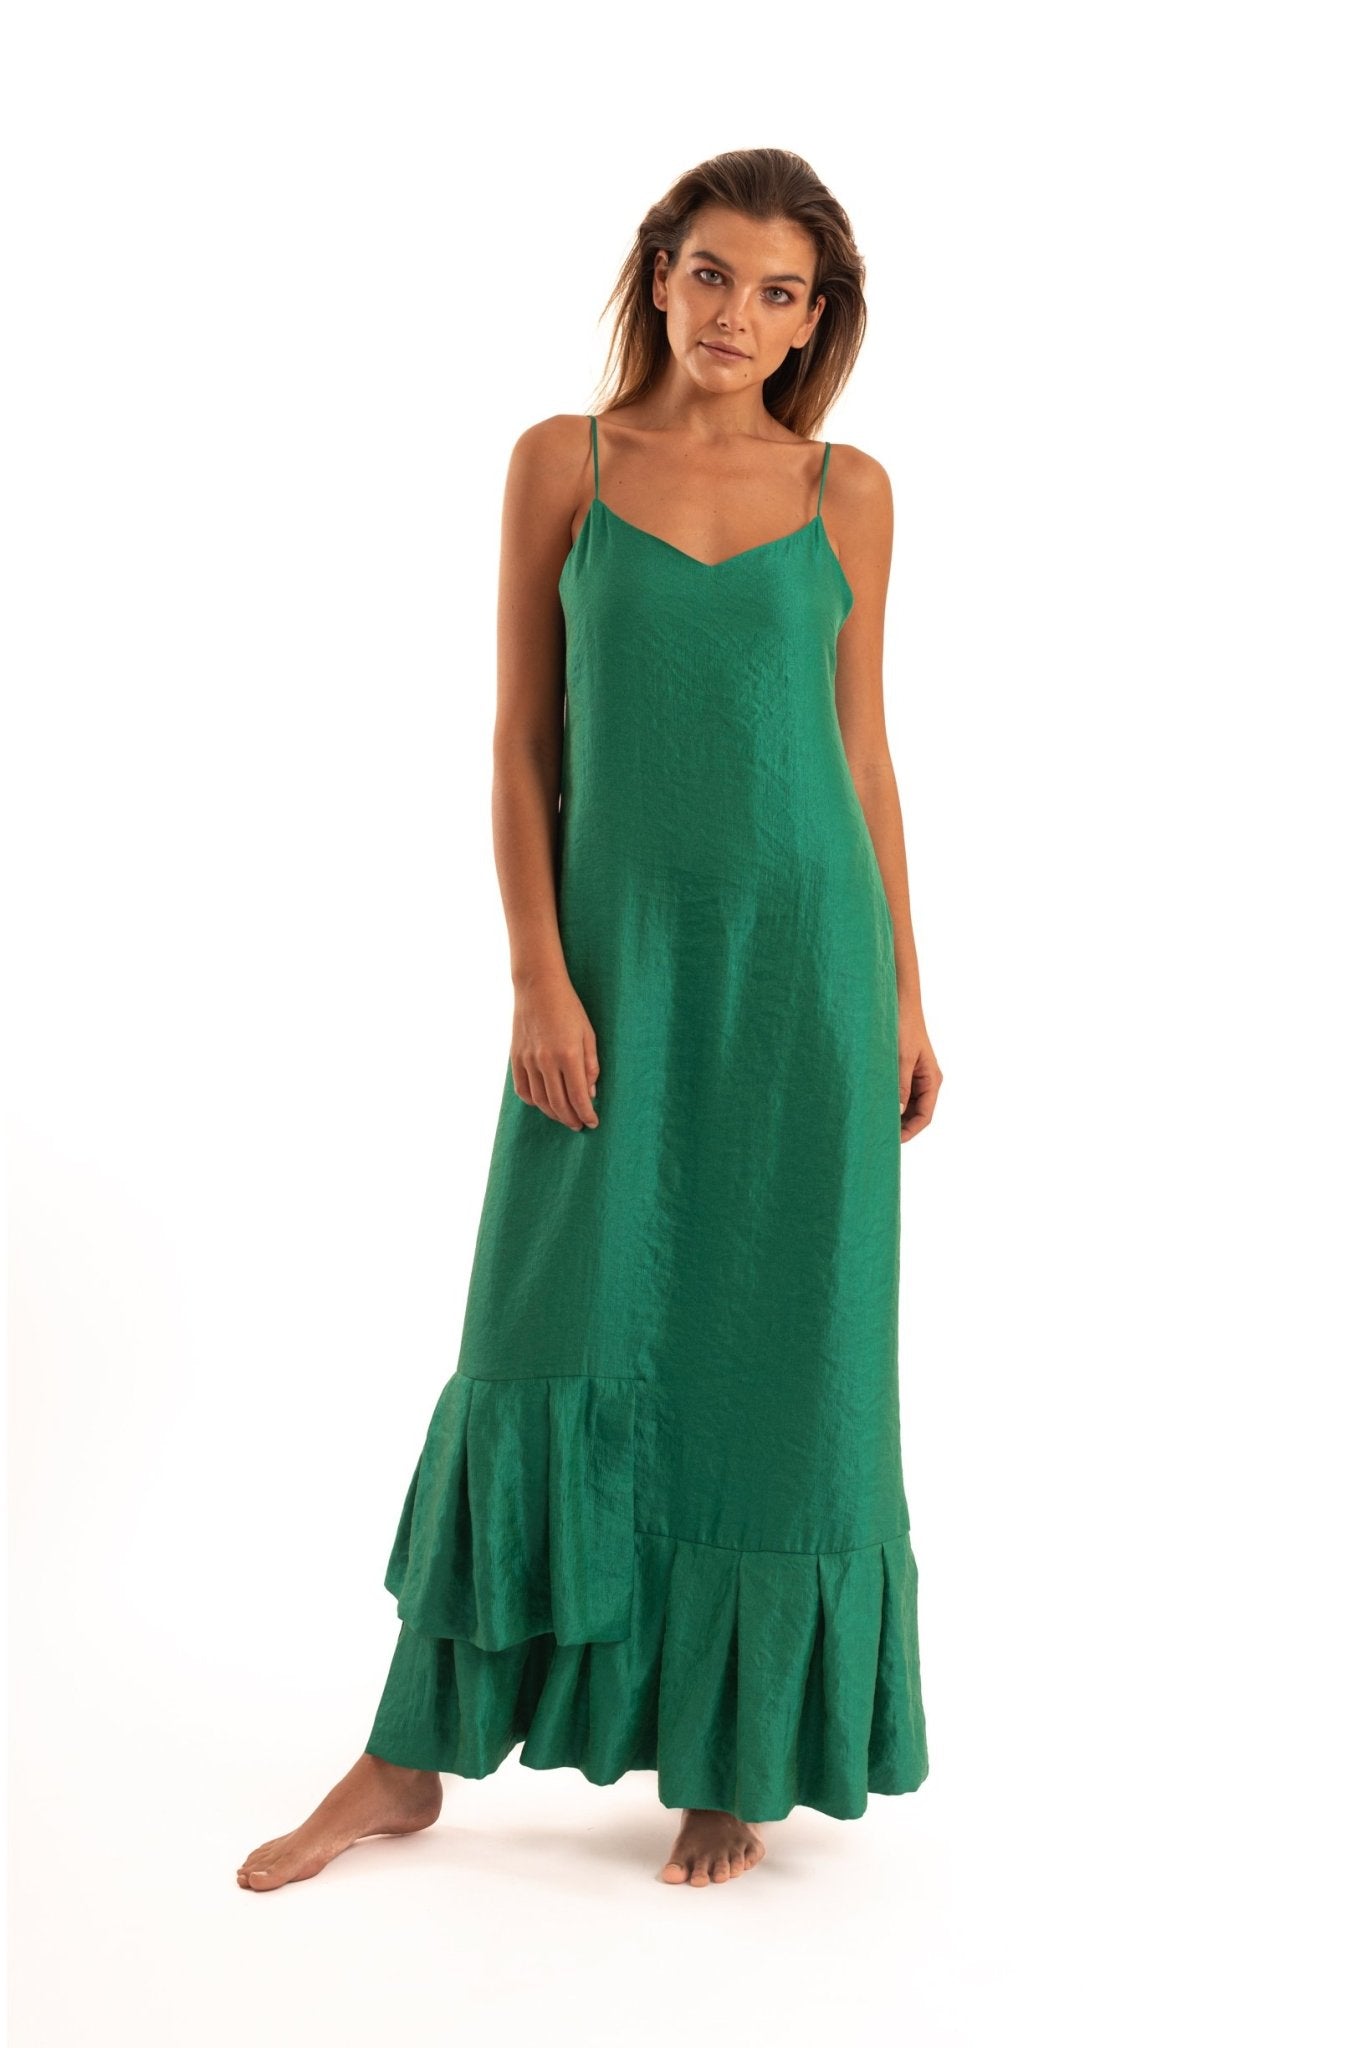 Green Slip Dress - NOPIN - The Clothing LoungeNOPIN